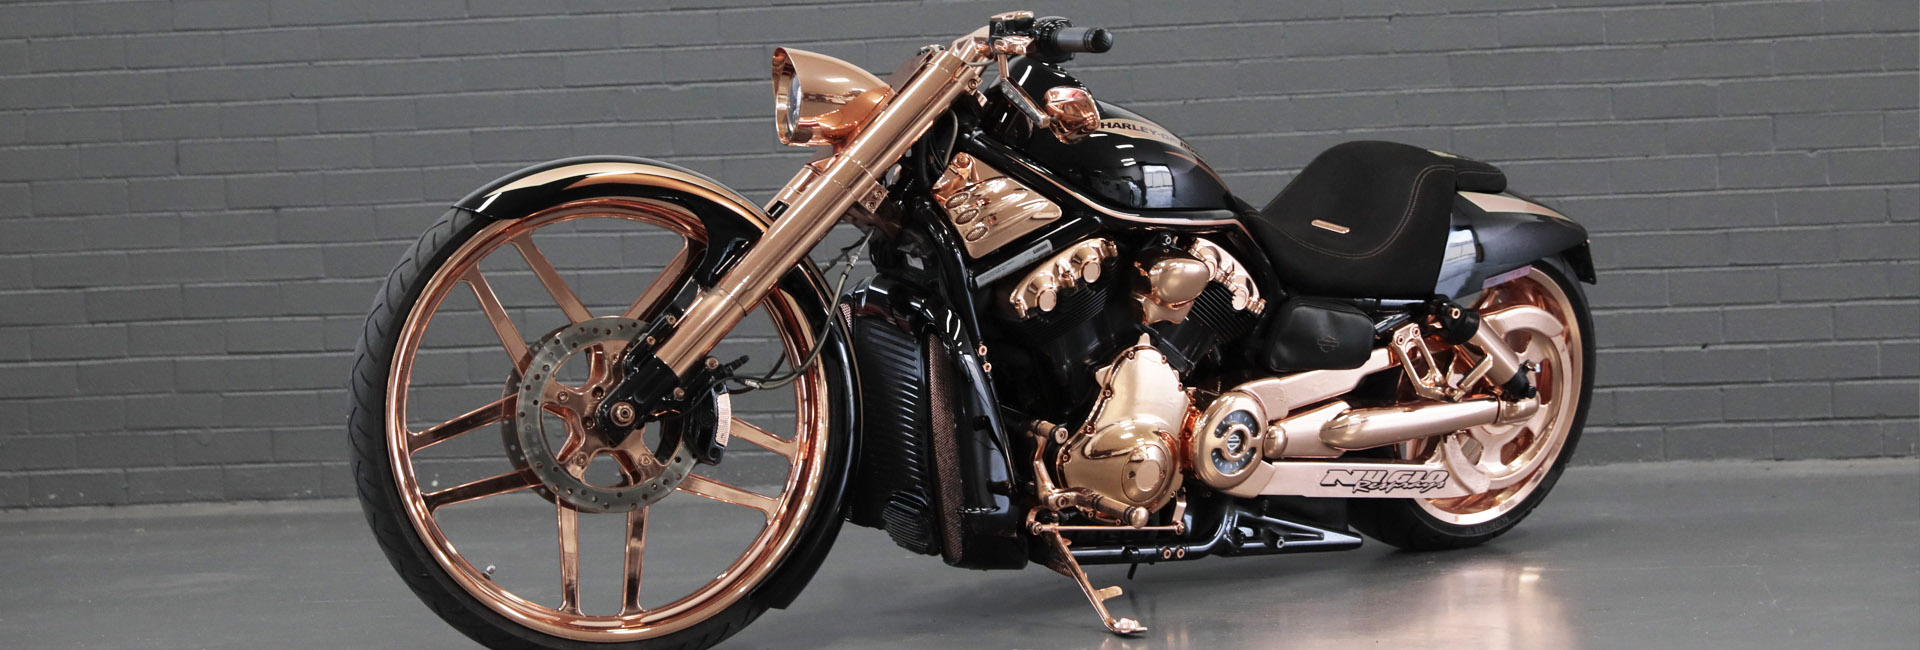 Bike-1920x650